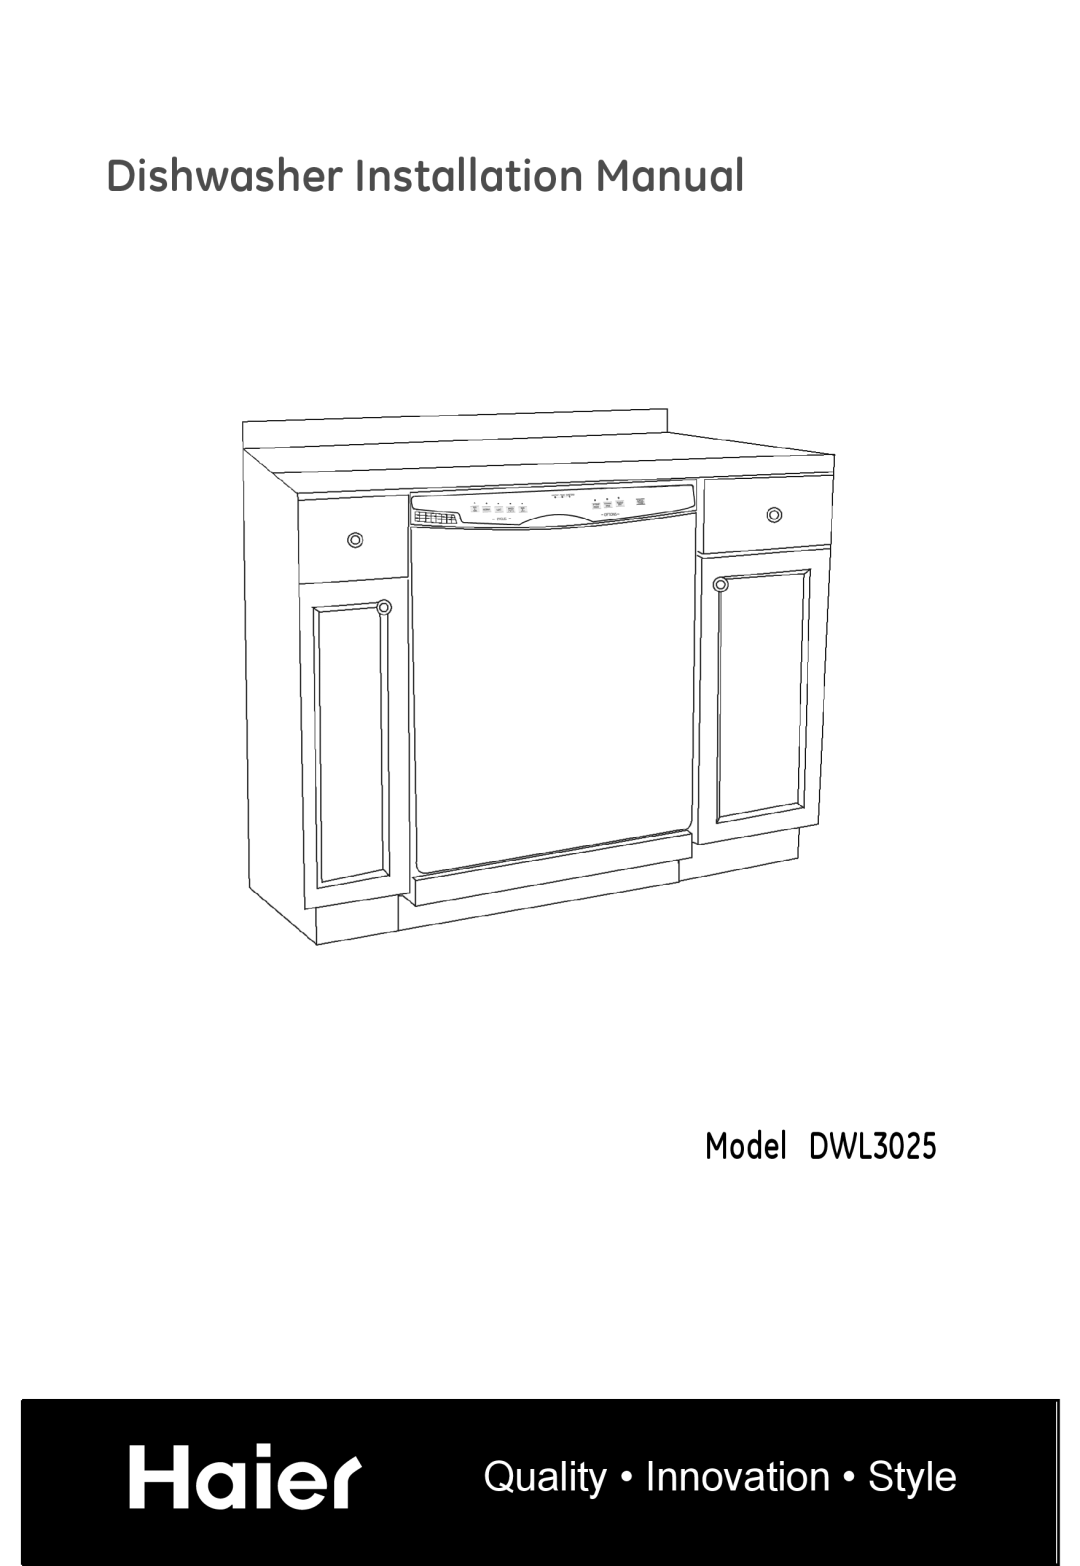 Haier installation manual Dishwasher Installation Manual, Quality Innovation Style, Model DWL3025 